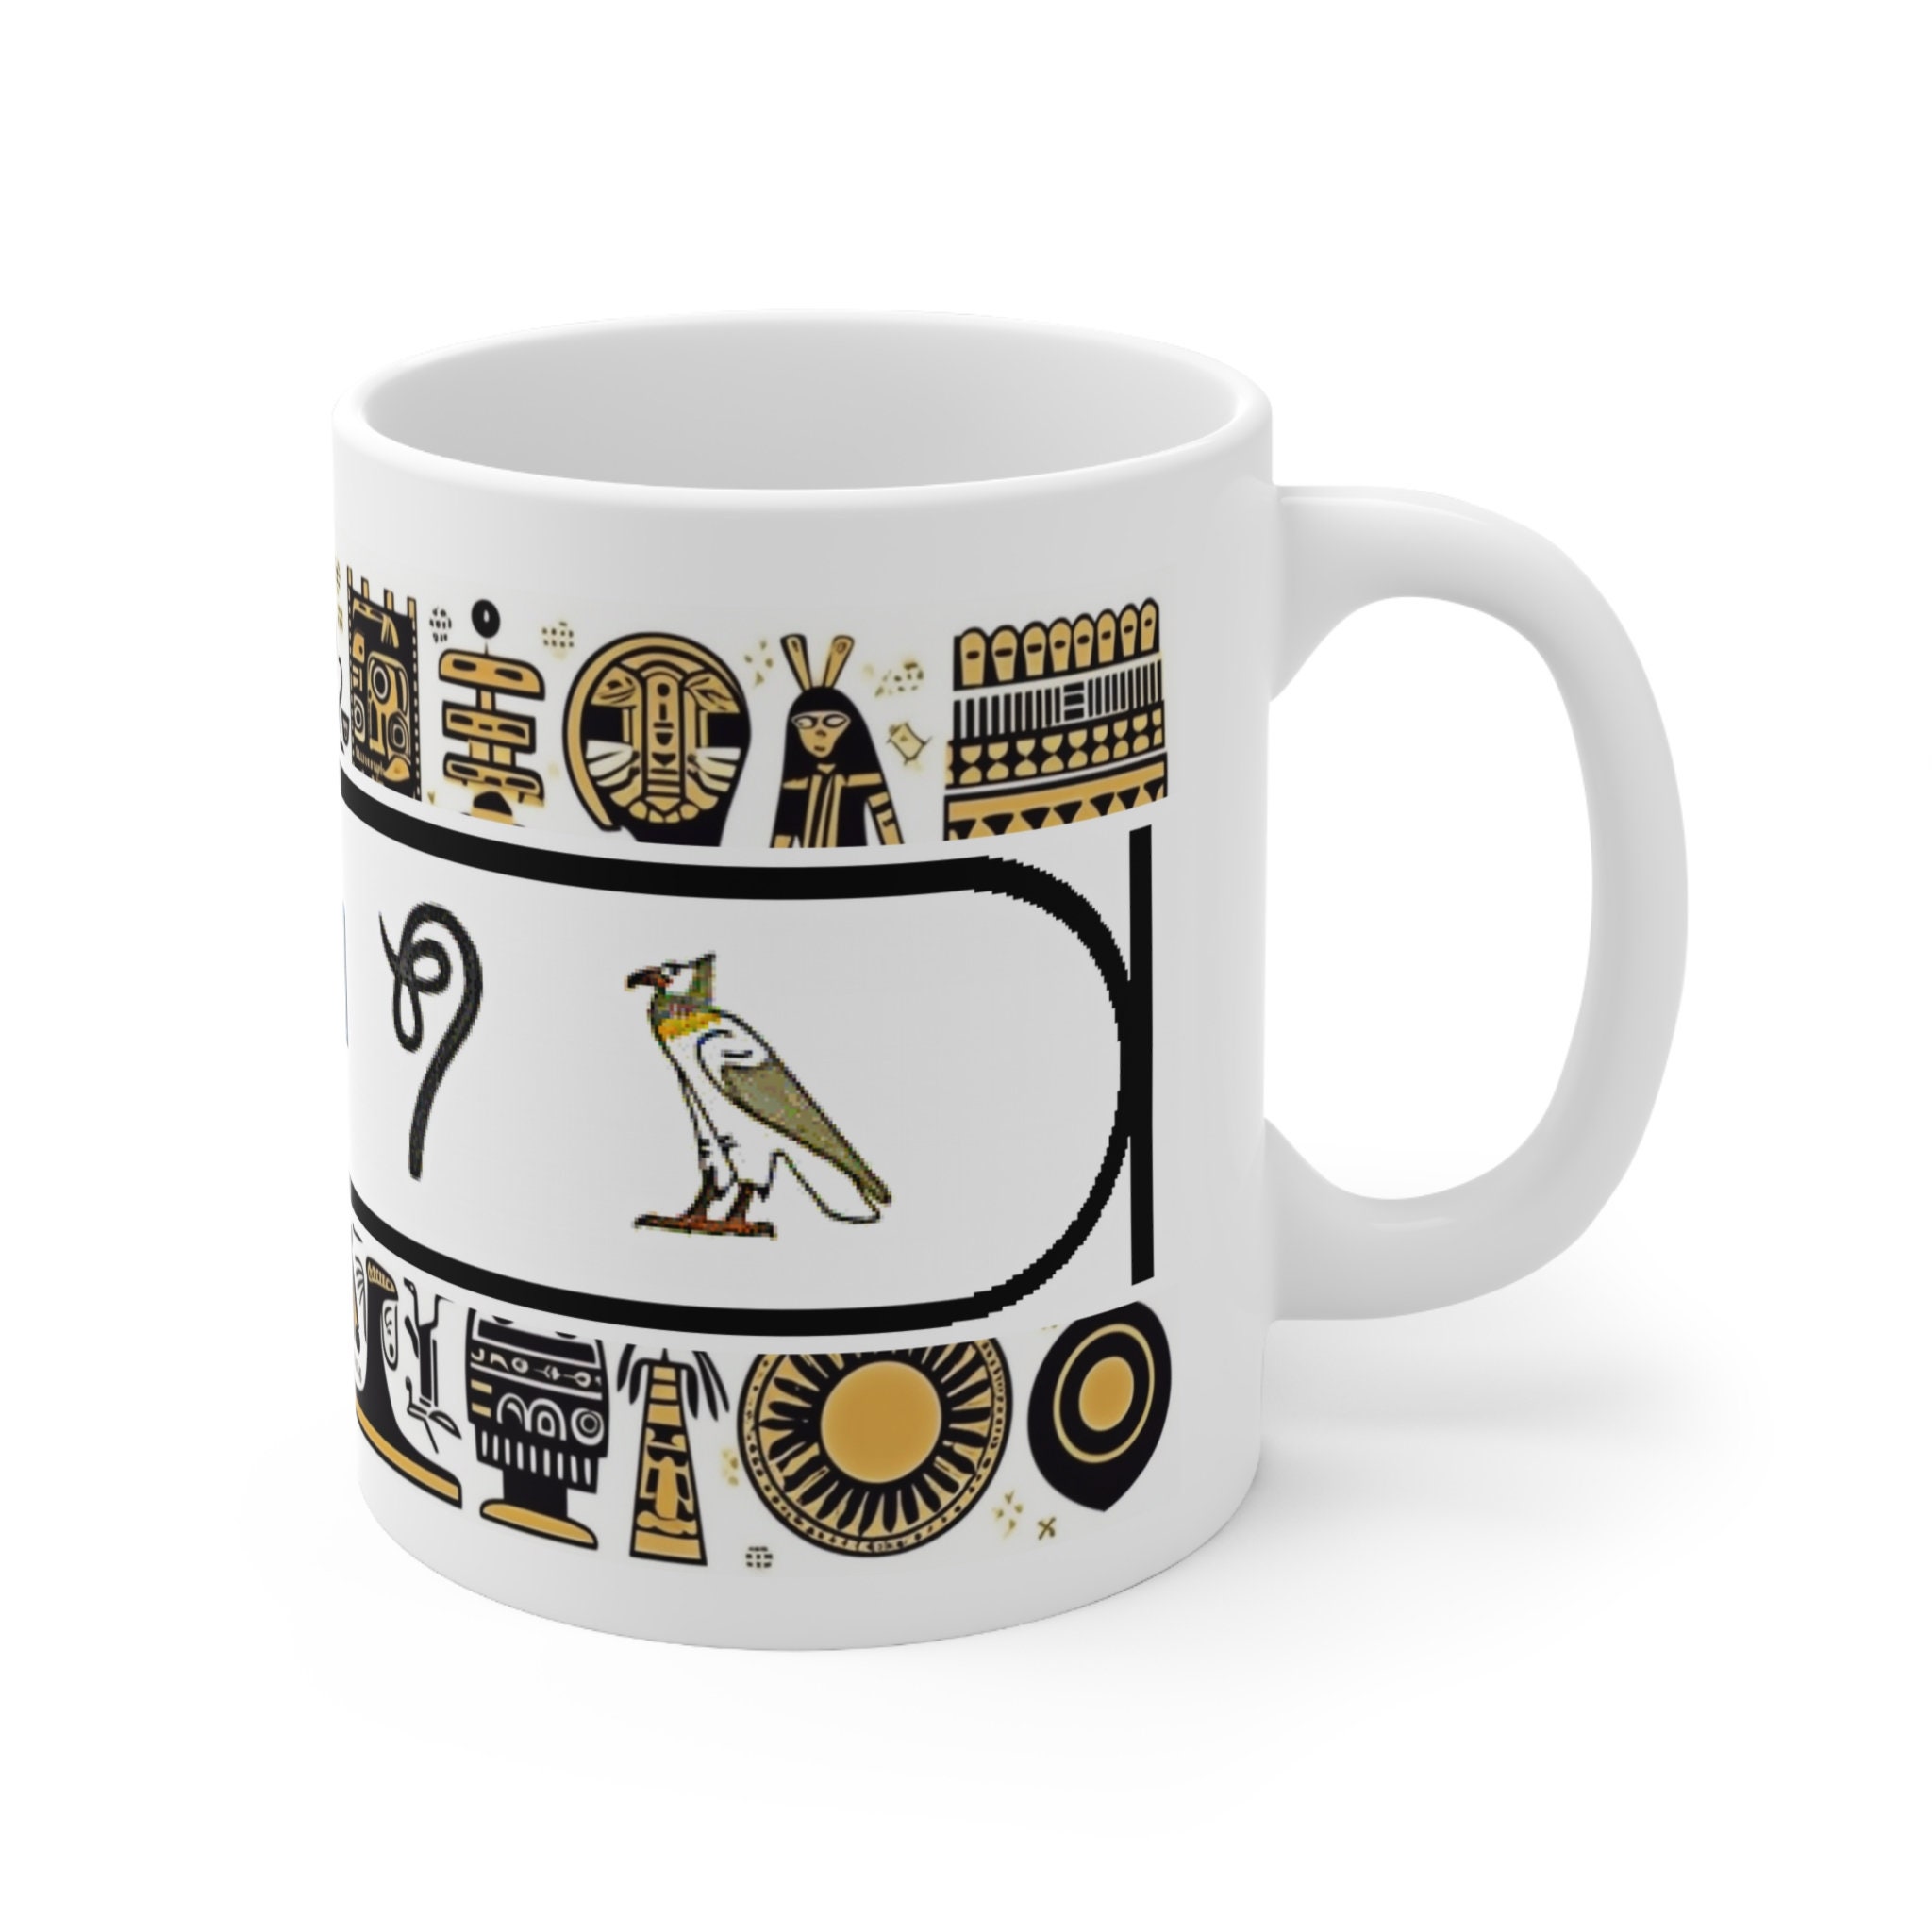 Mighty Mug - Egypt - For All Time ;)